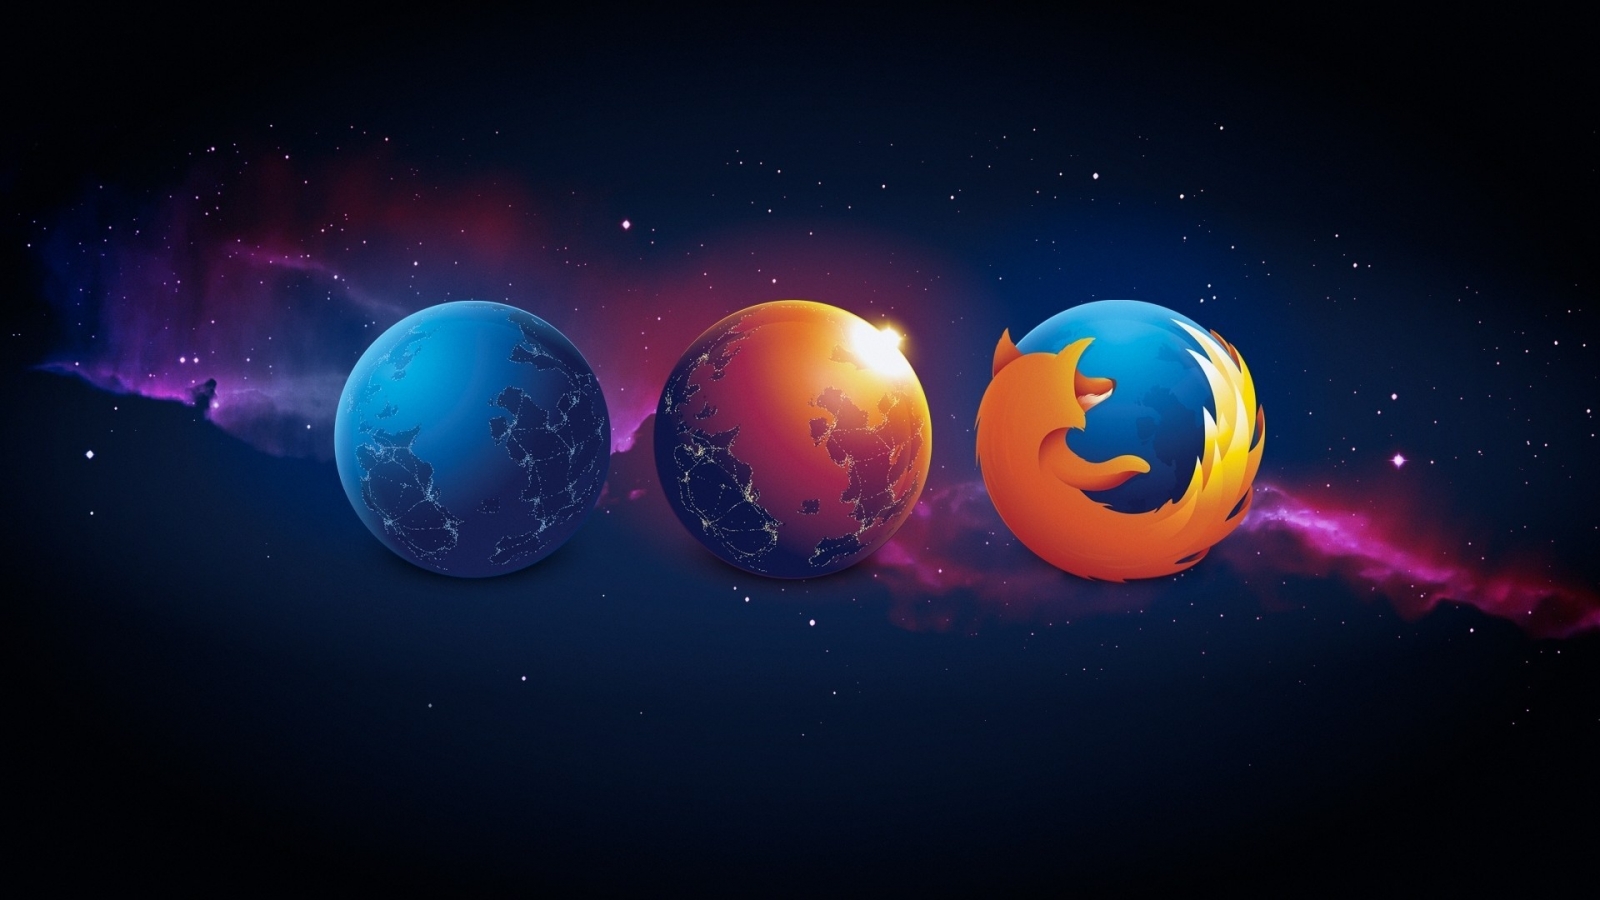 Firefox Planet for 1600 x 900 HDTV resolution